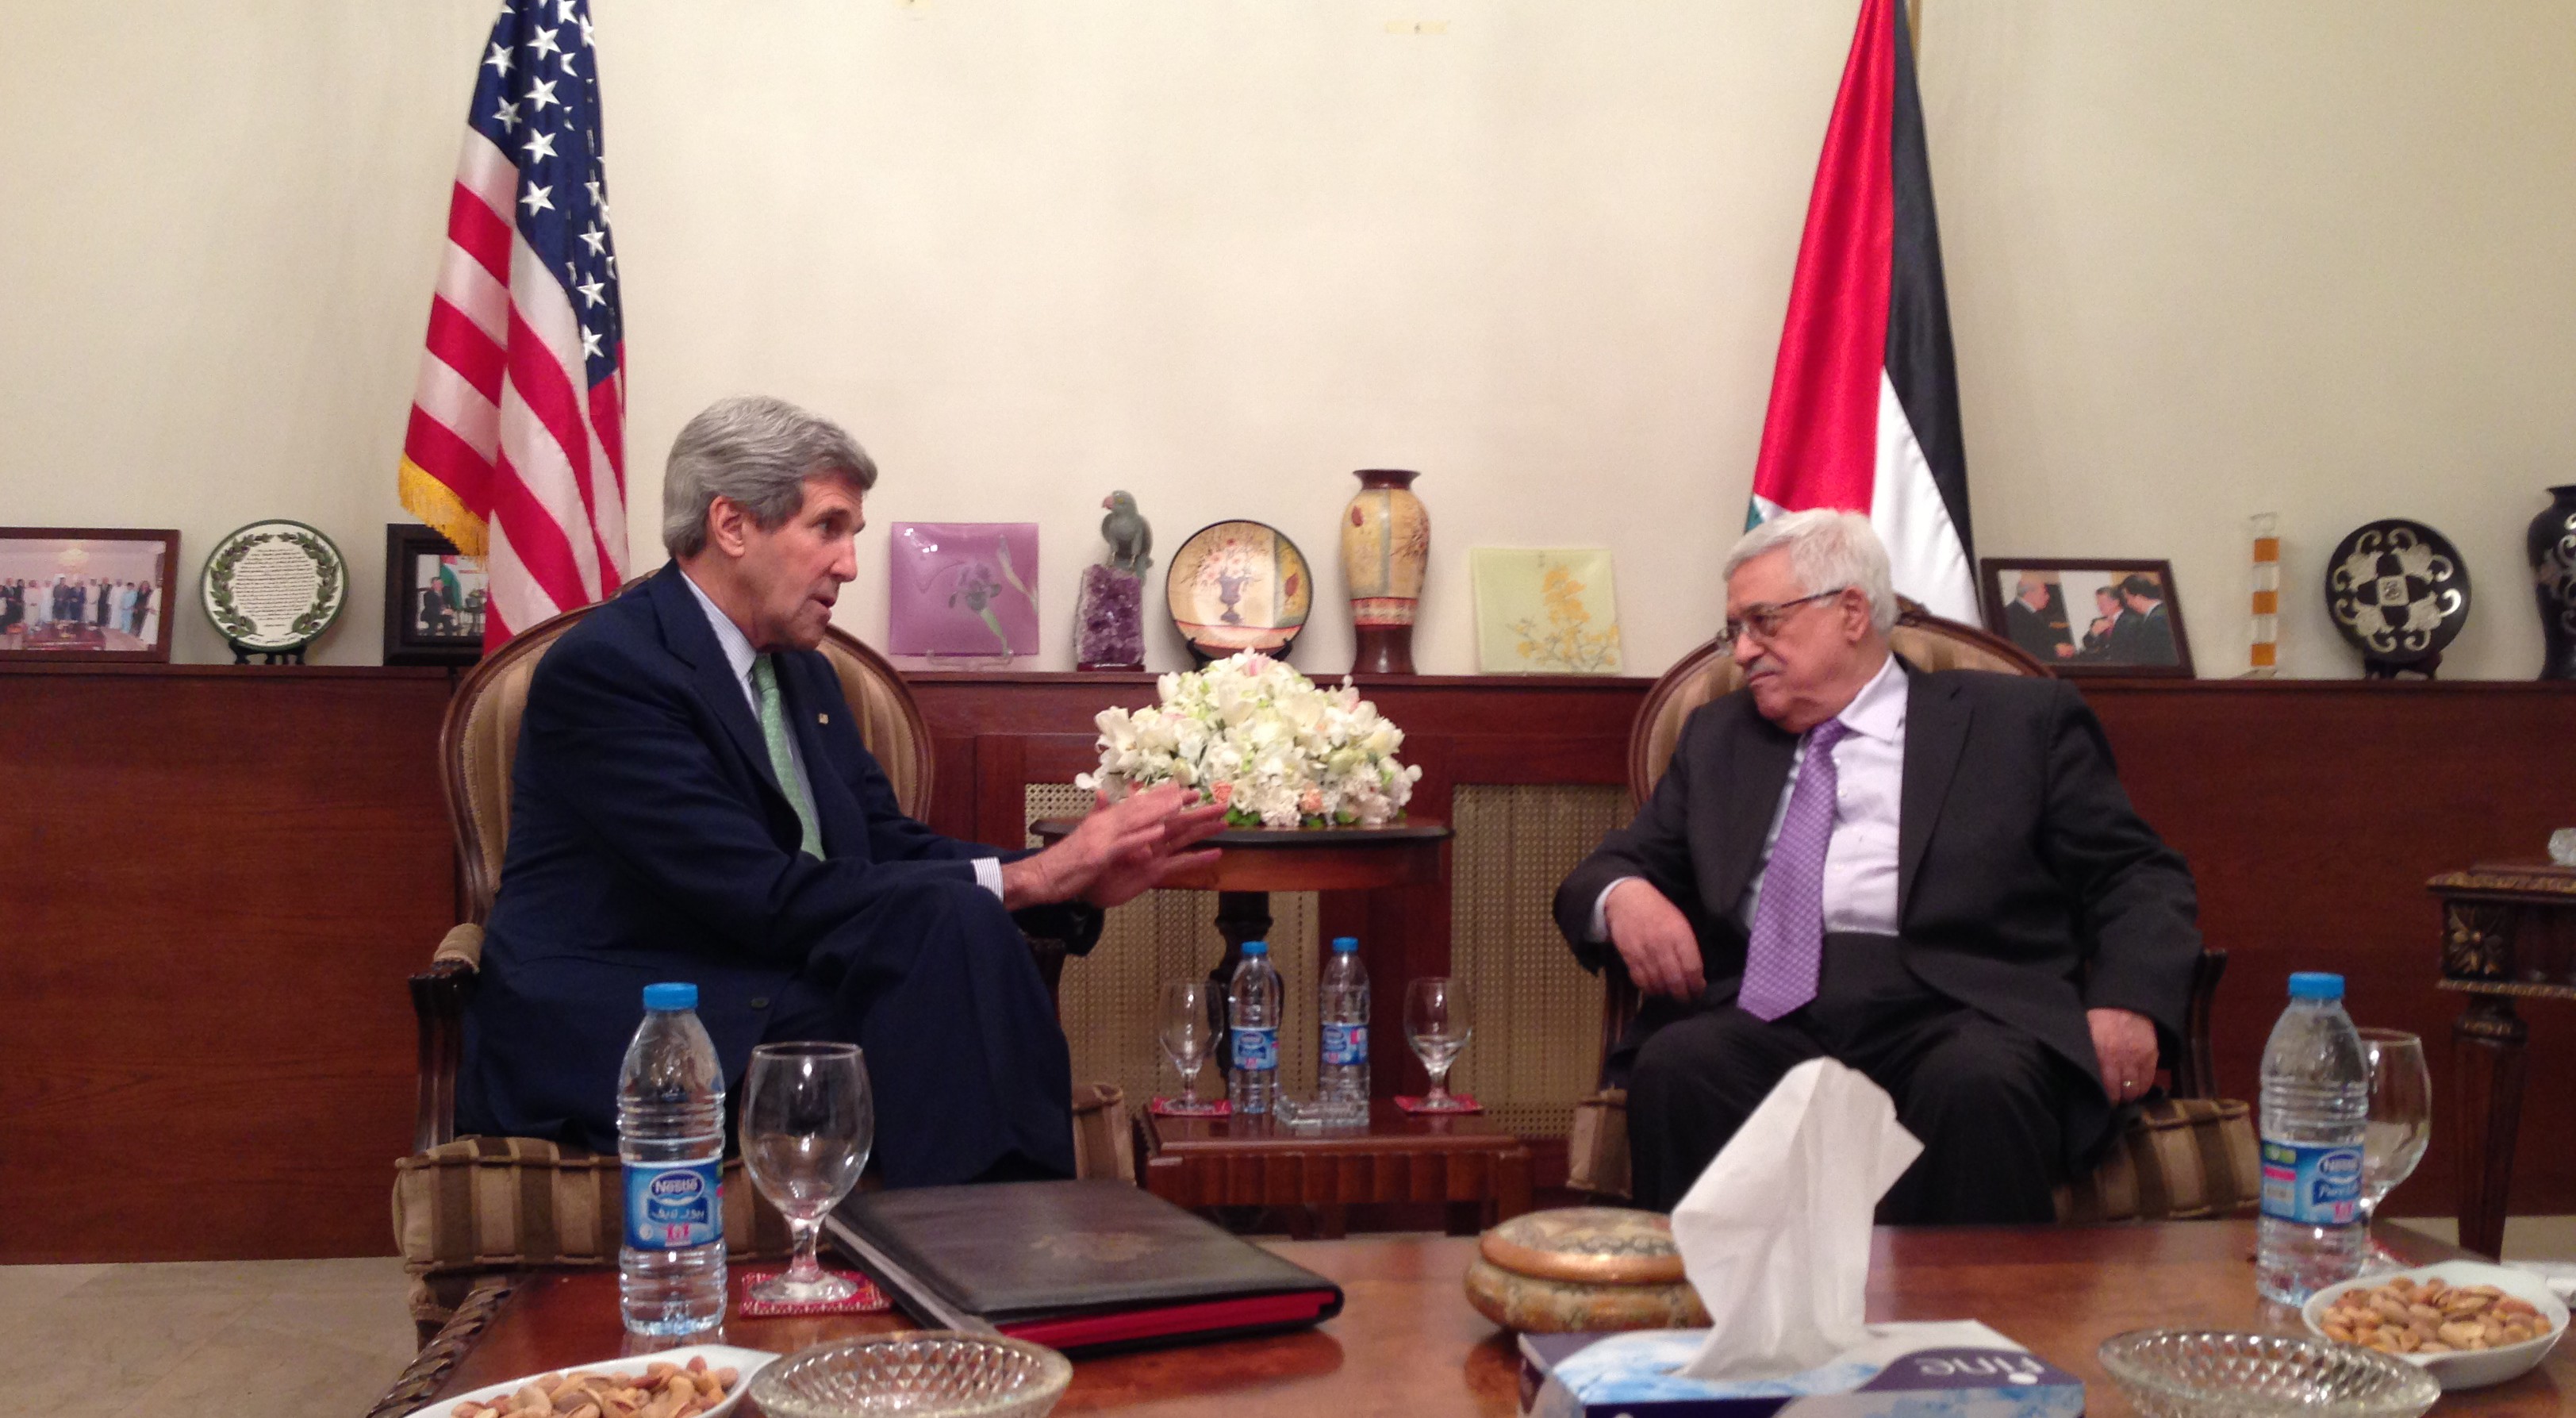 http://upload.wikimedia.org/wikipedia/commons/7/72/Secretary_Kerry_and_Palestinian_President_Abbas_Meet_in_Amman.jpg